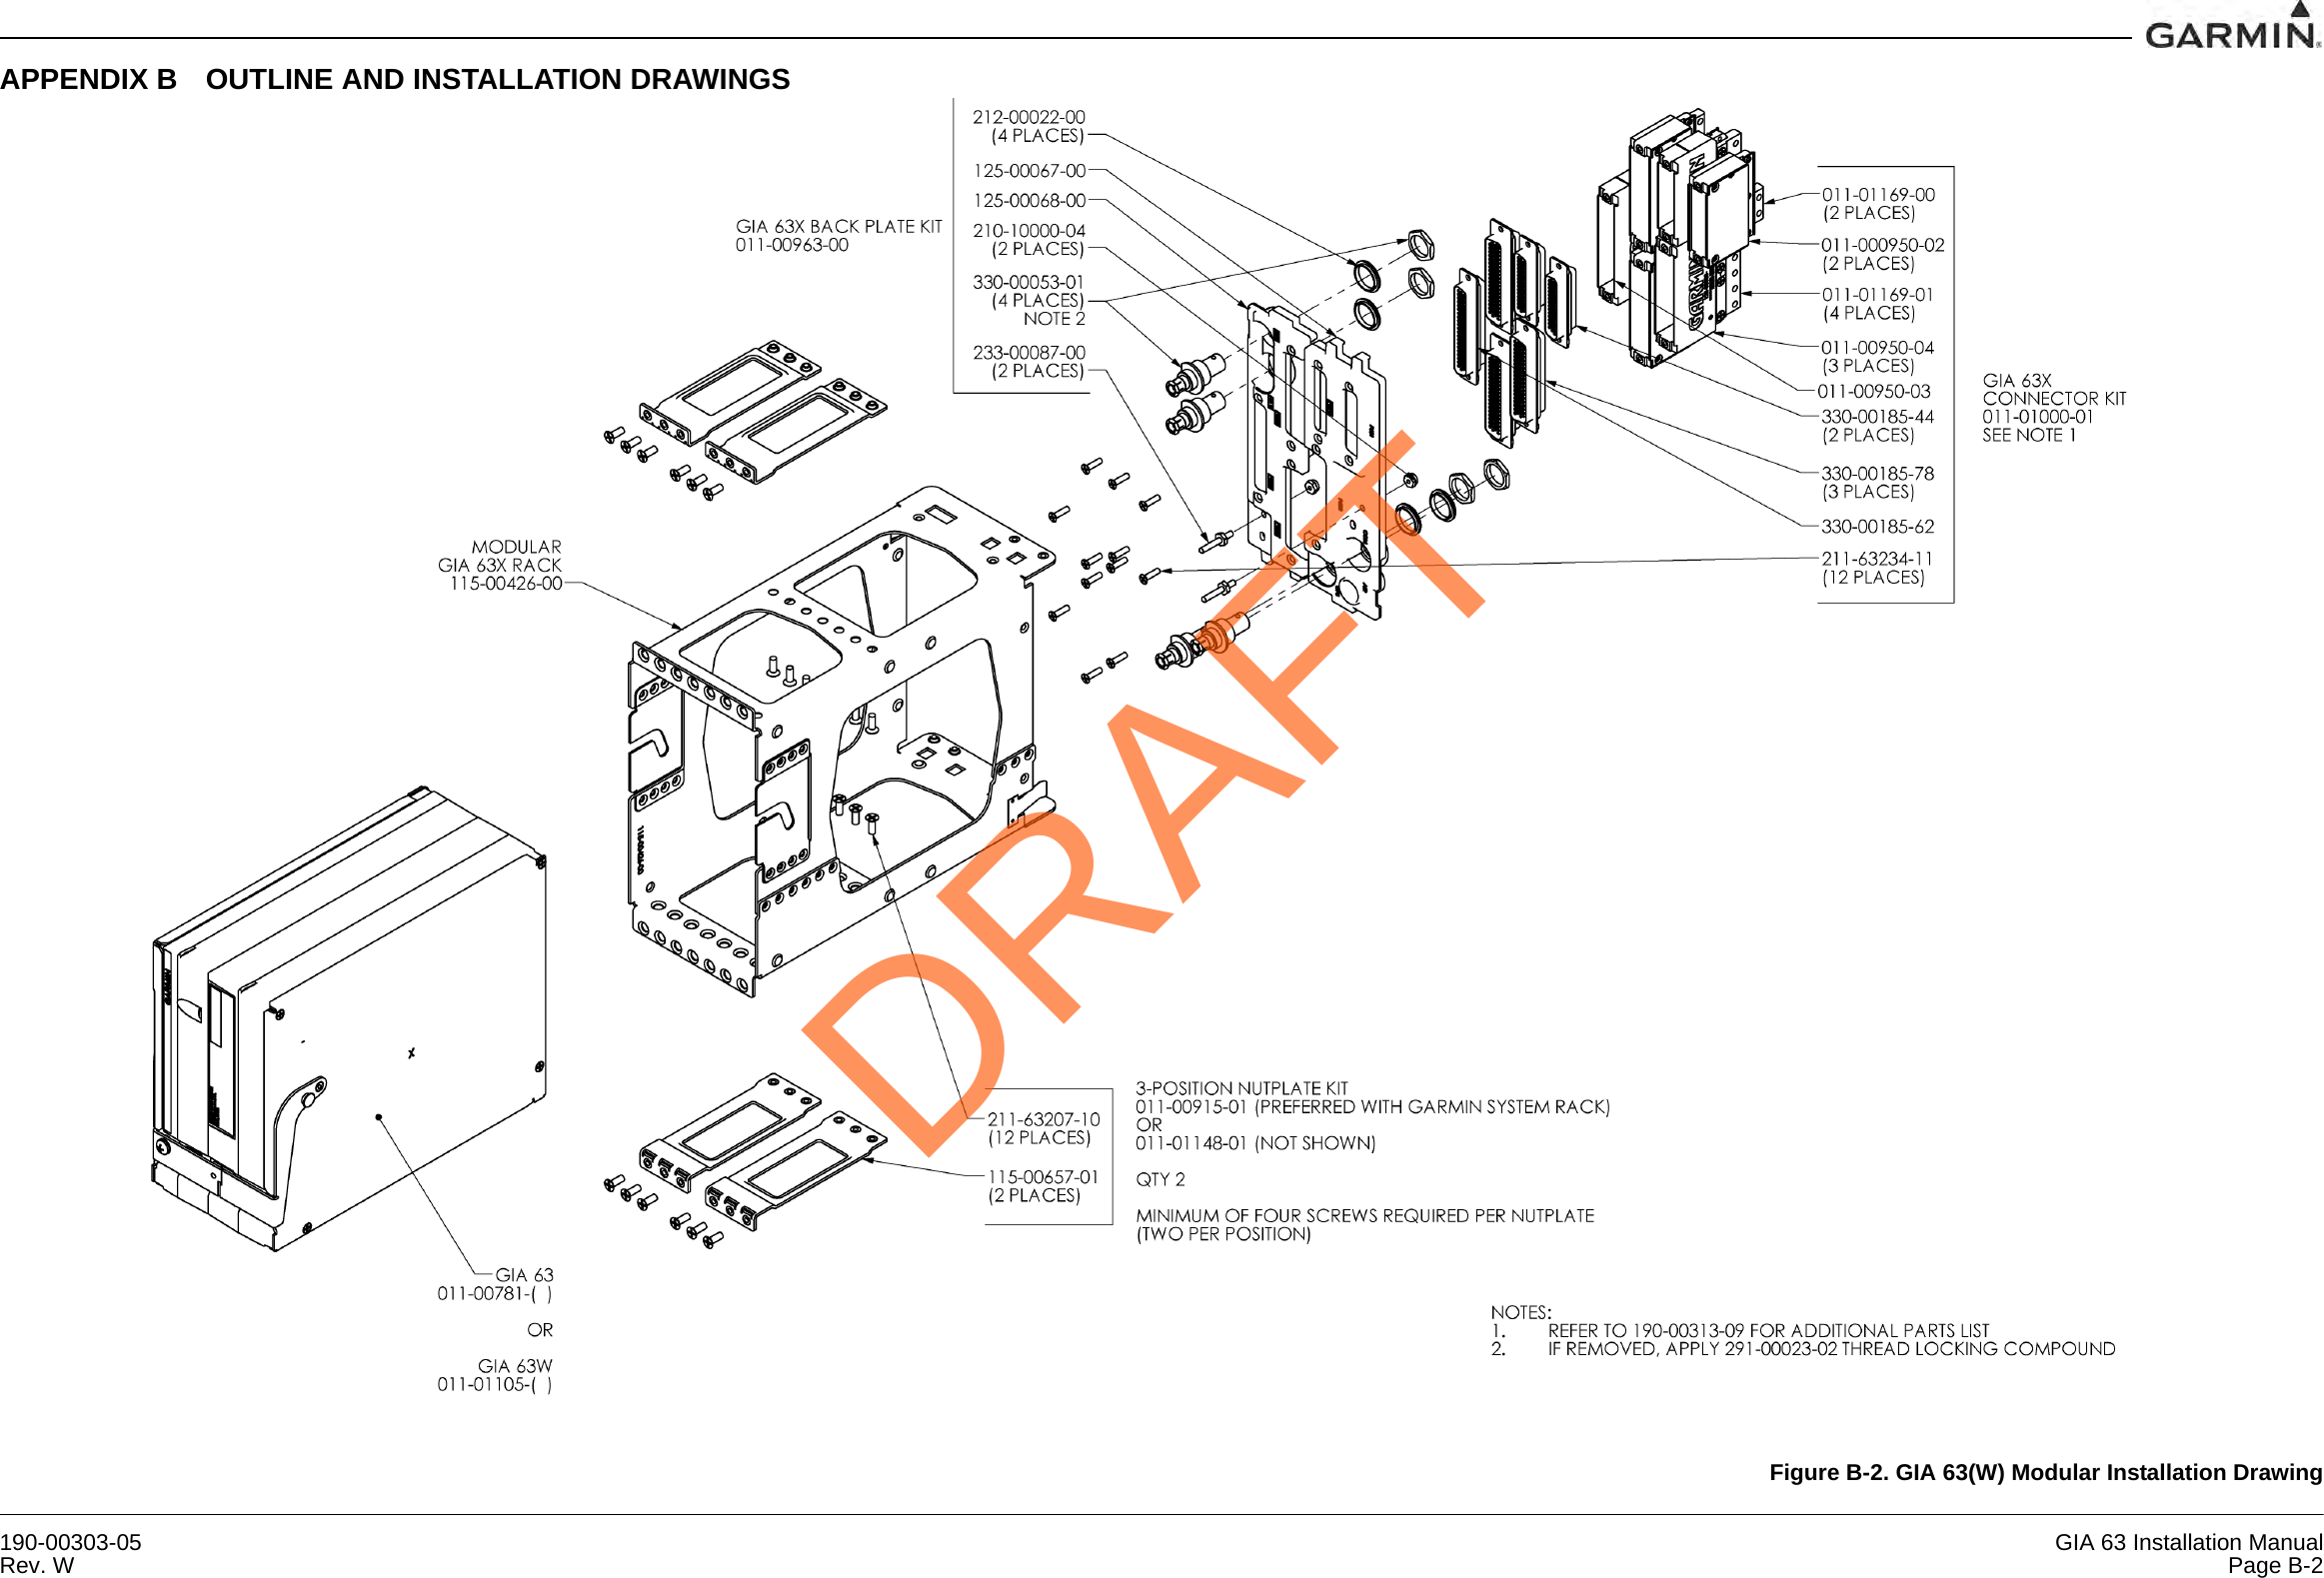 190-00303-05 GIA 63 Installation ManualRev. W Page B-2APPENDIX B OUTLINE AND INSTALLATION DRAWINGSFigure B-2. GIA 63(W) Modular Installation DrawingDRAFT